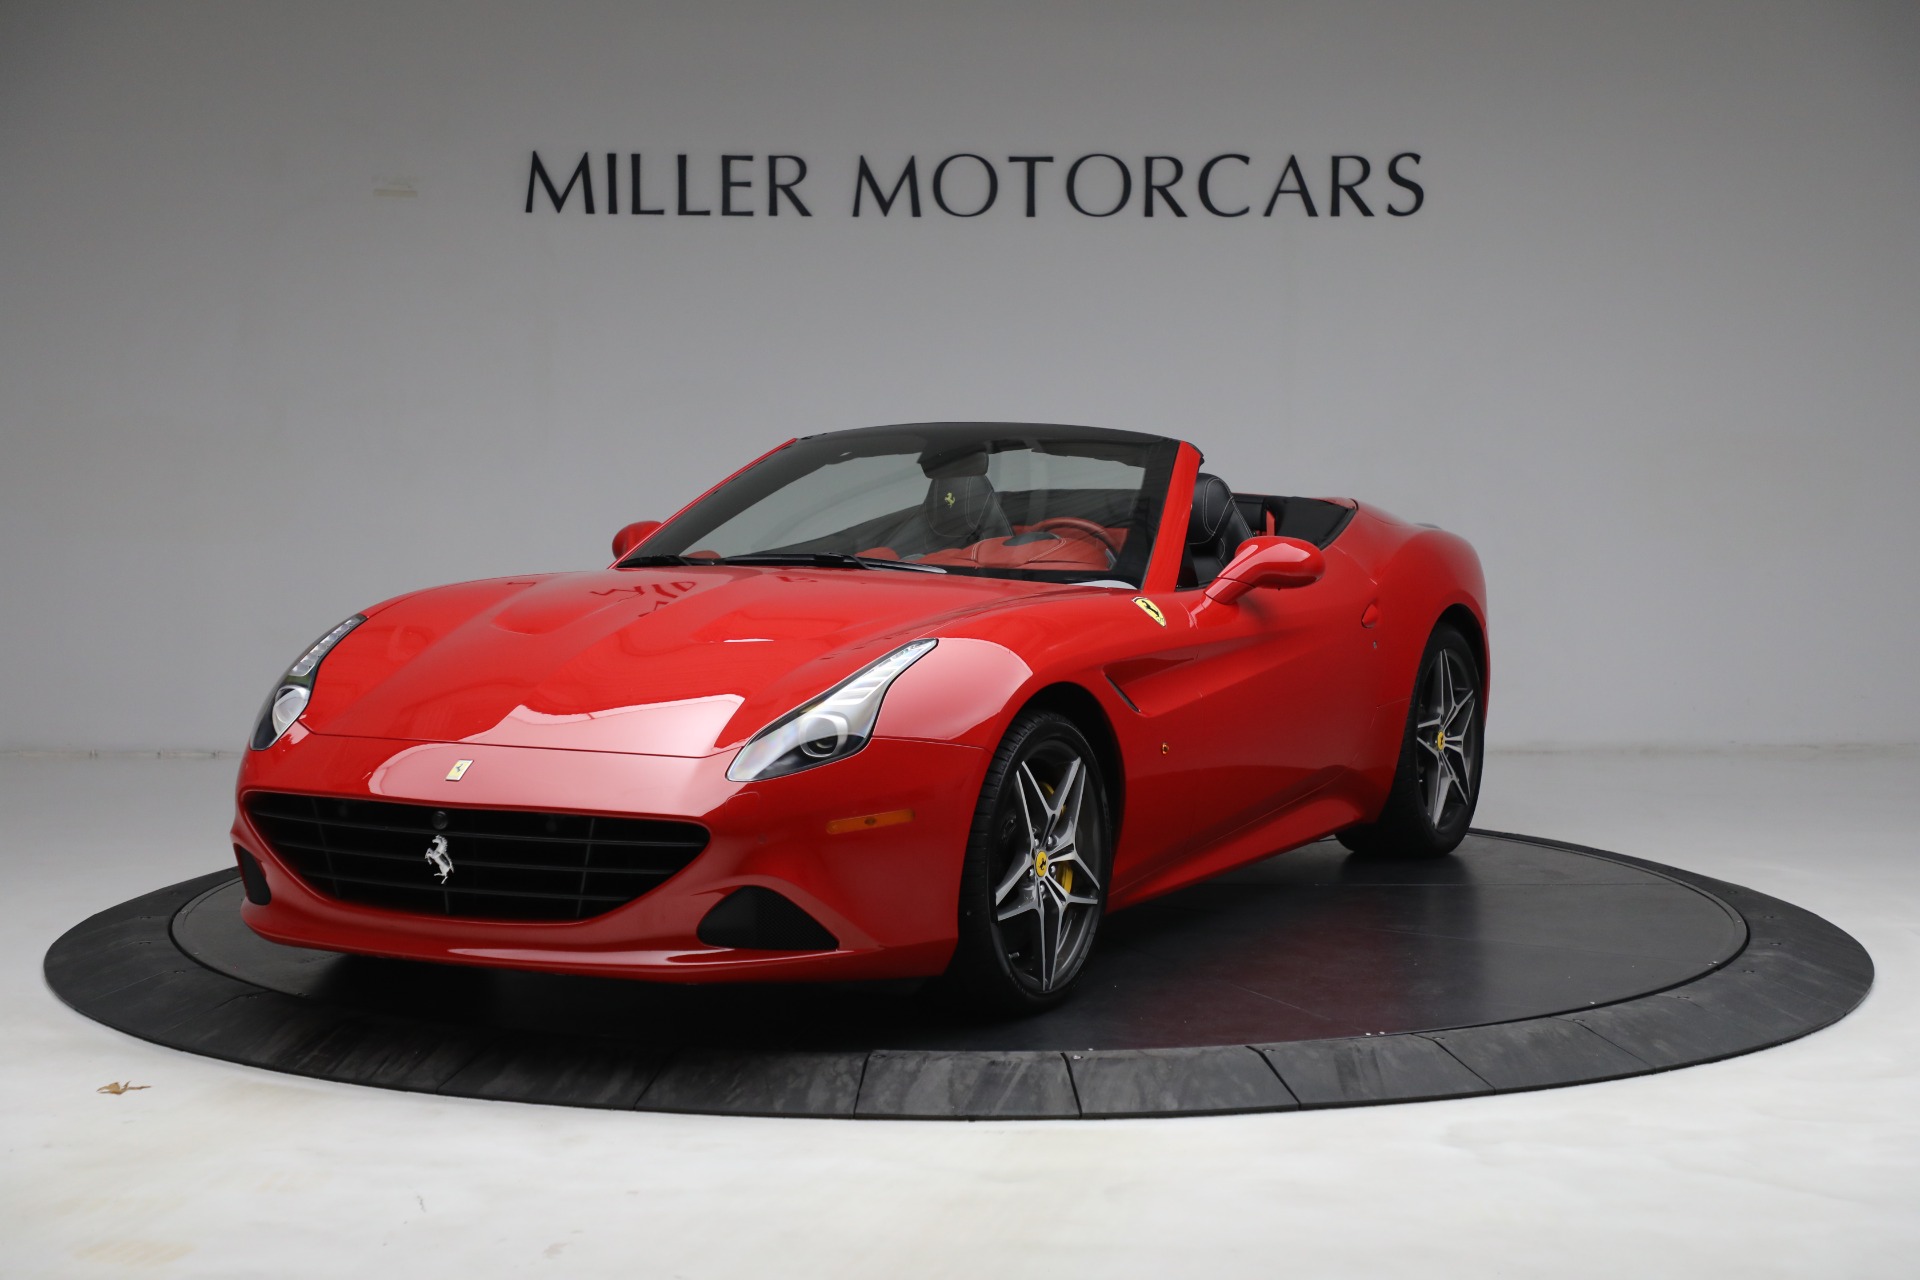 Used 2017 Ferrari California T for sale Sold at McLaren Greenwich in Greenwich CT 06830 1